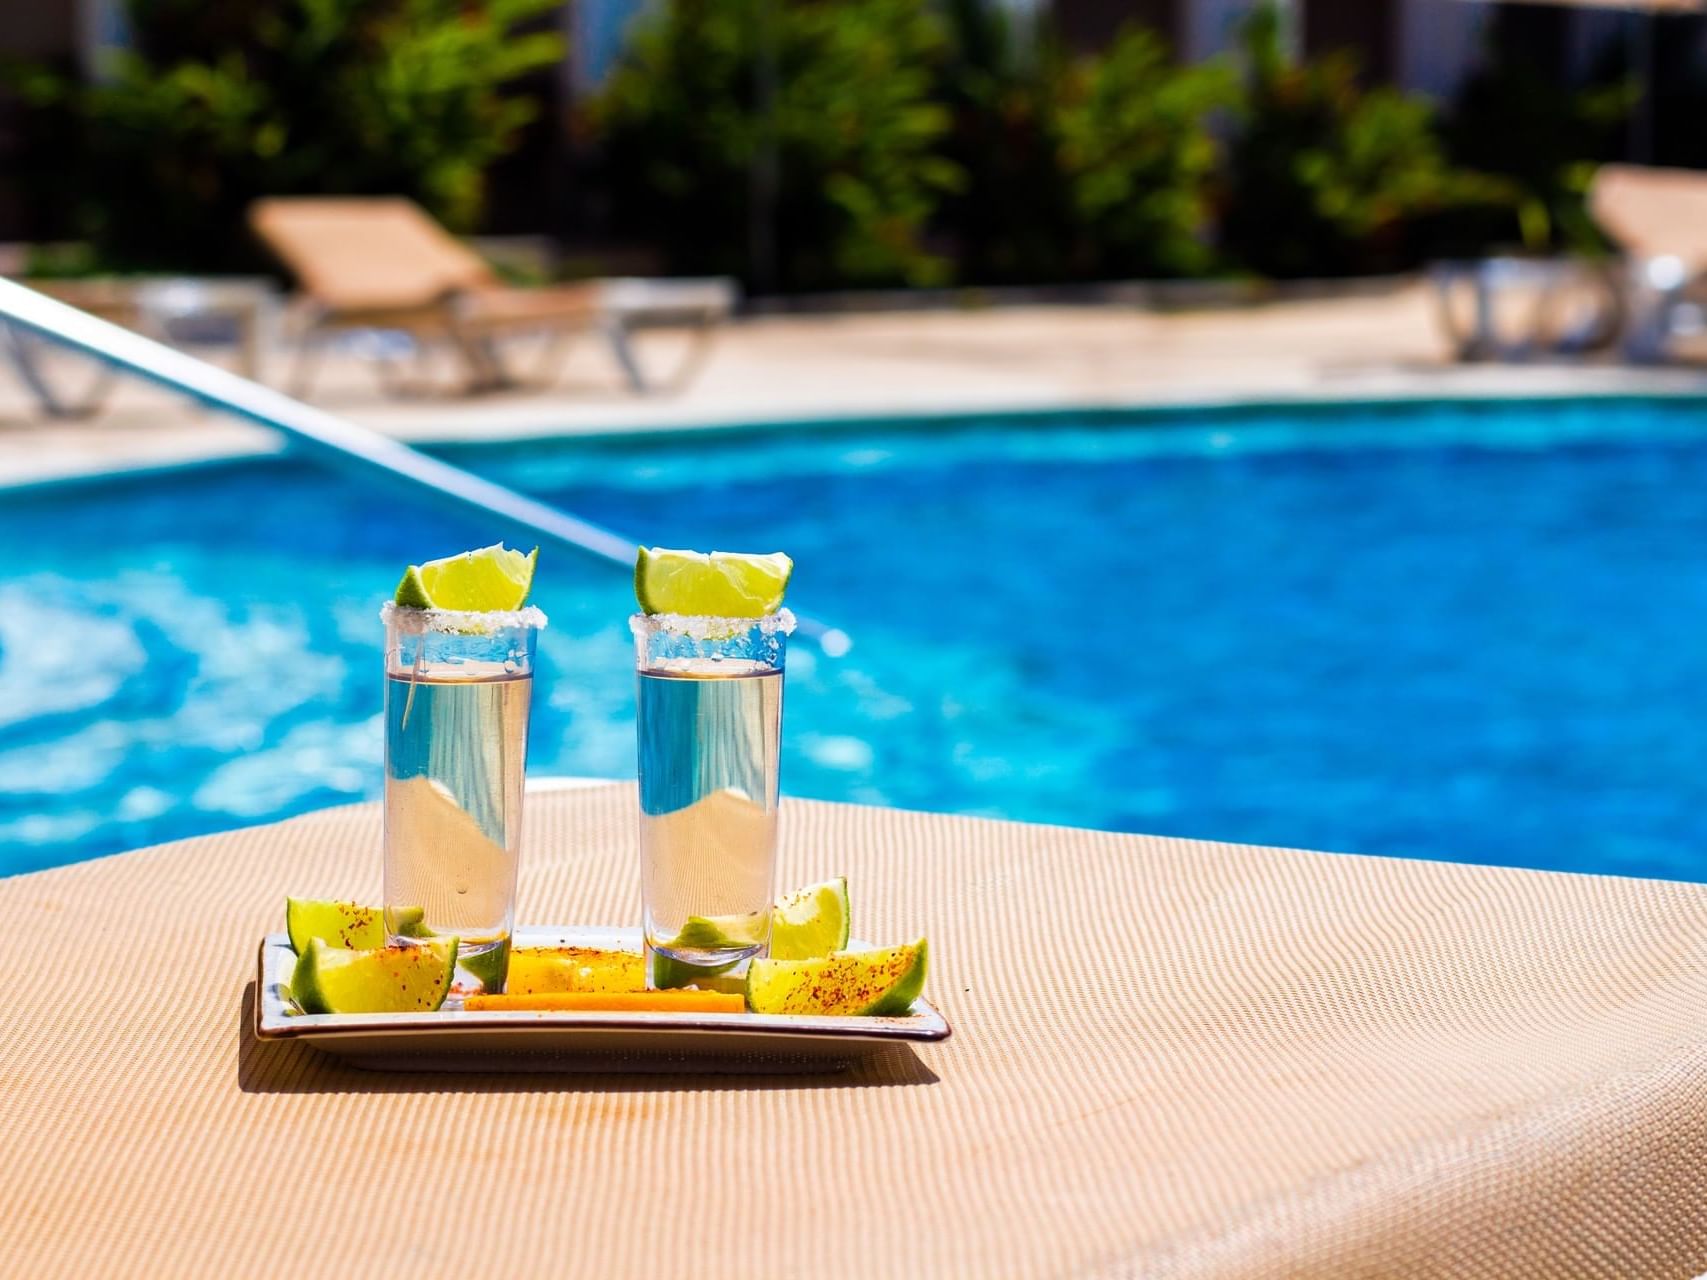 2 Lime drinks served near the pool in Colibrí Aqua Bar at Plaza Pelicanos Club Beach Resort